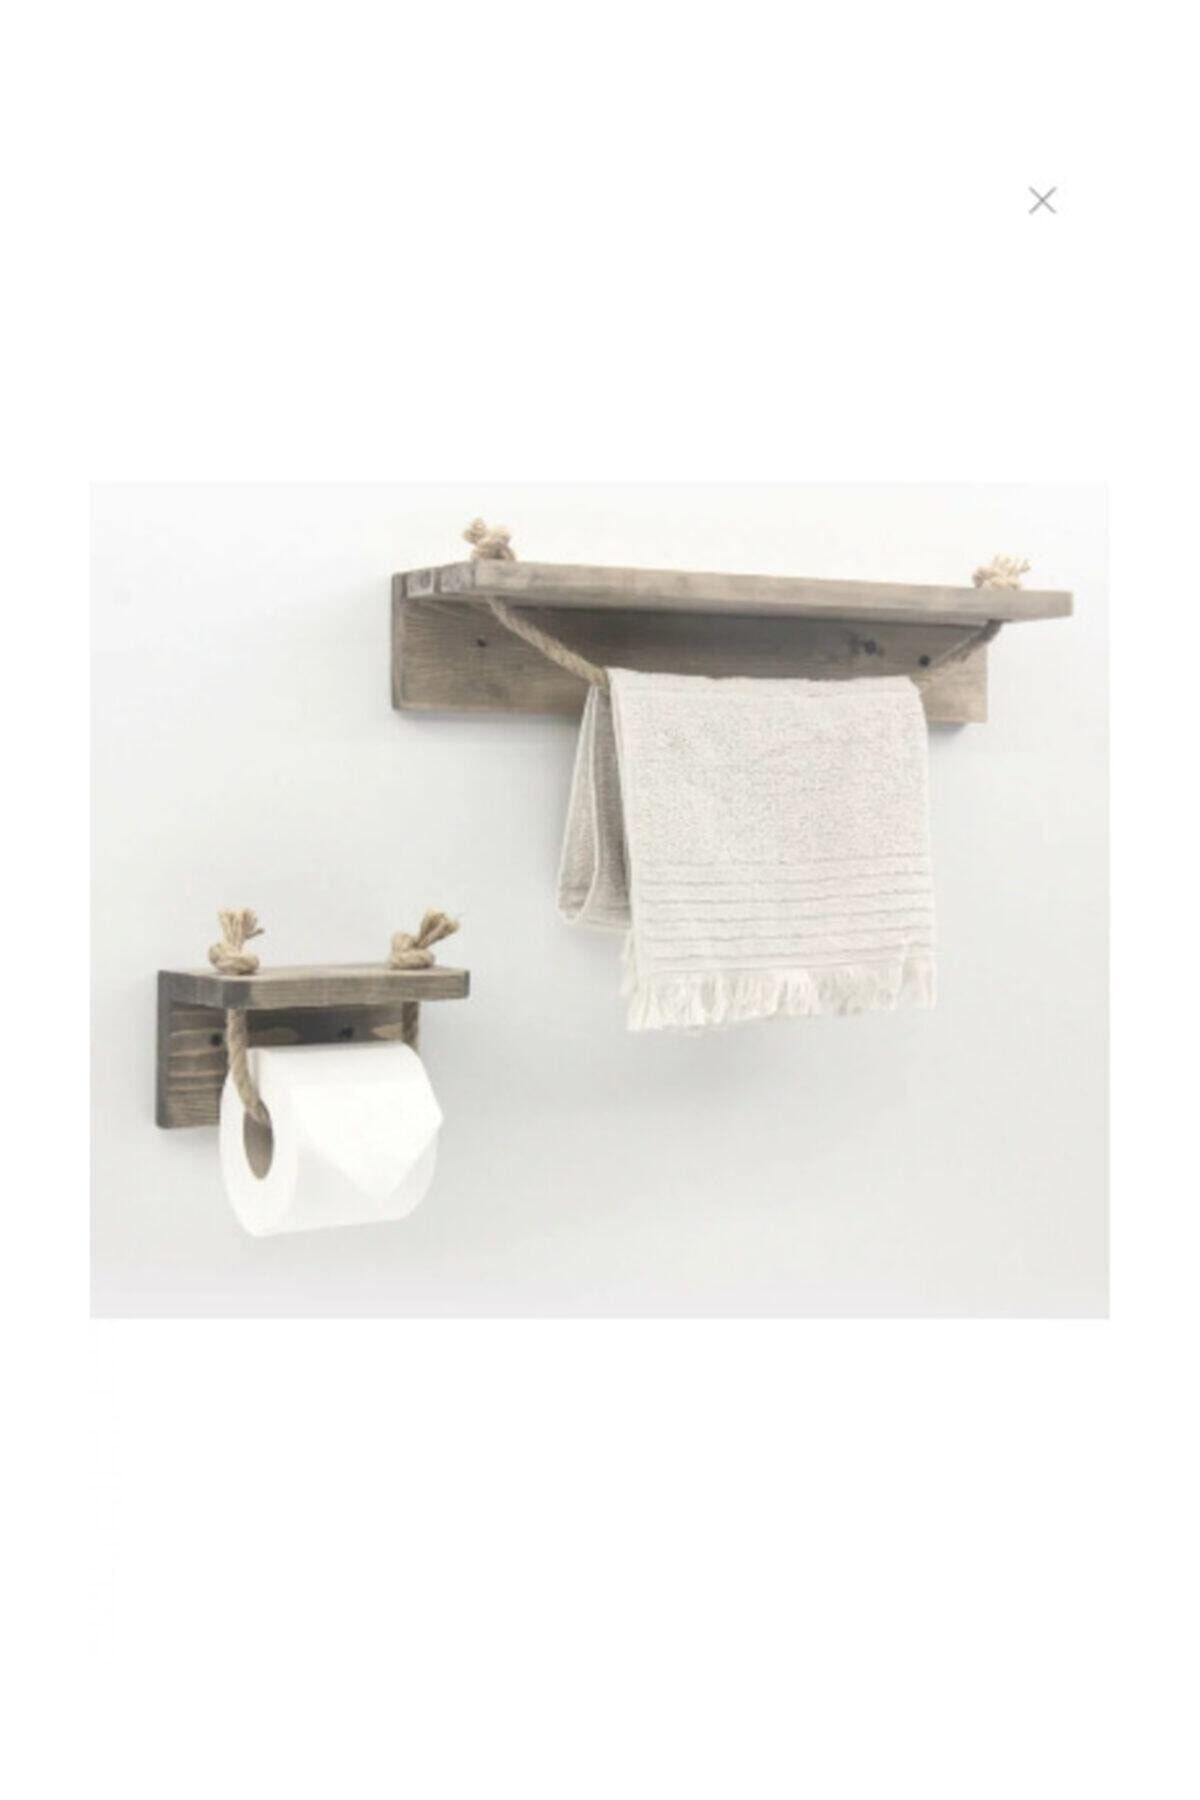 Dkm Dizayn Banyo Seti Ahşap Banyo Rafı Tuvalet Kağıtlığı Masif Ahşap Banyo Havluluk Havlu Rafı